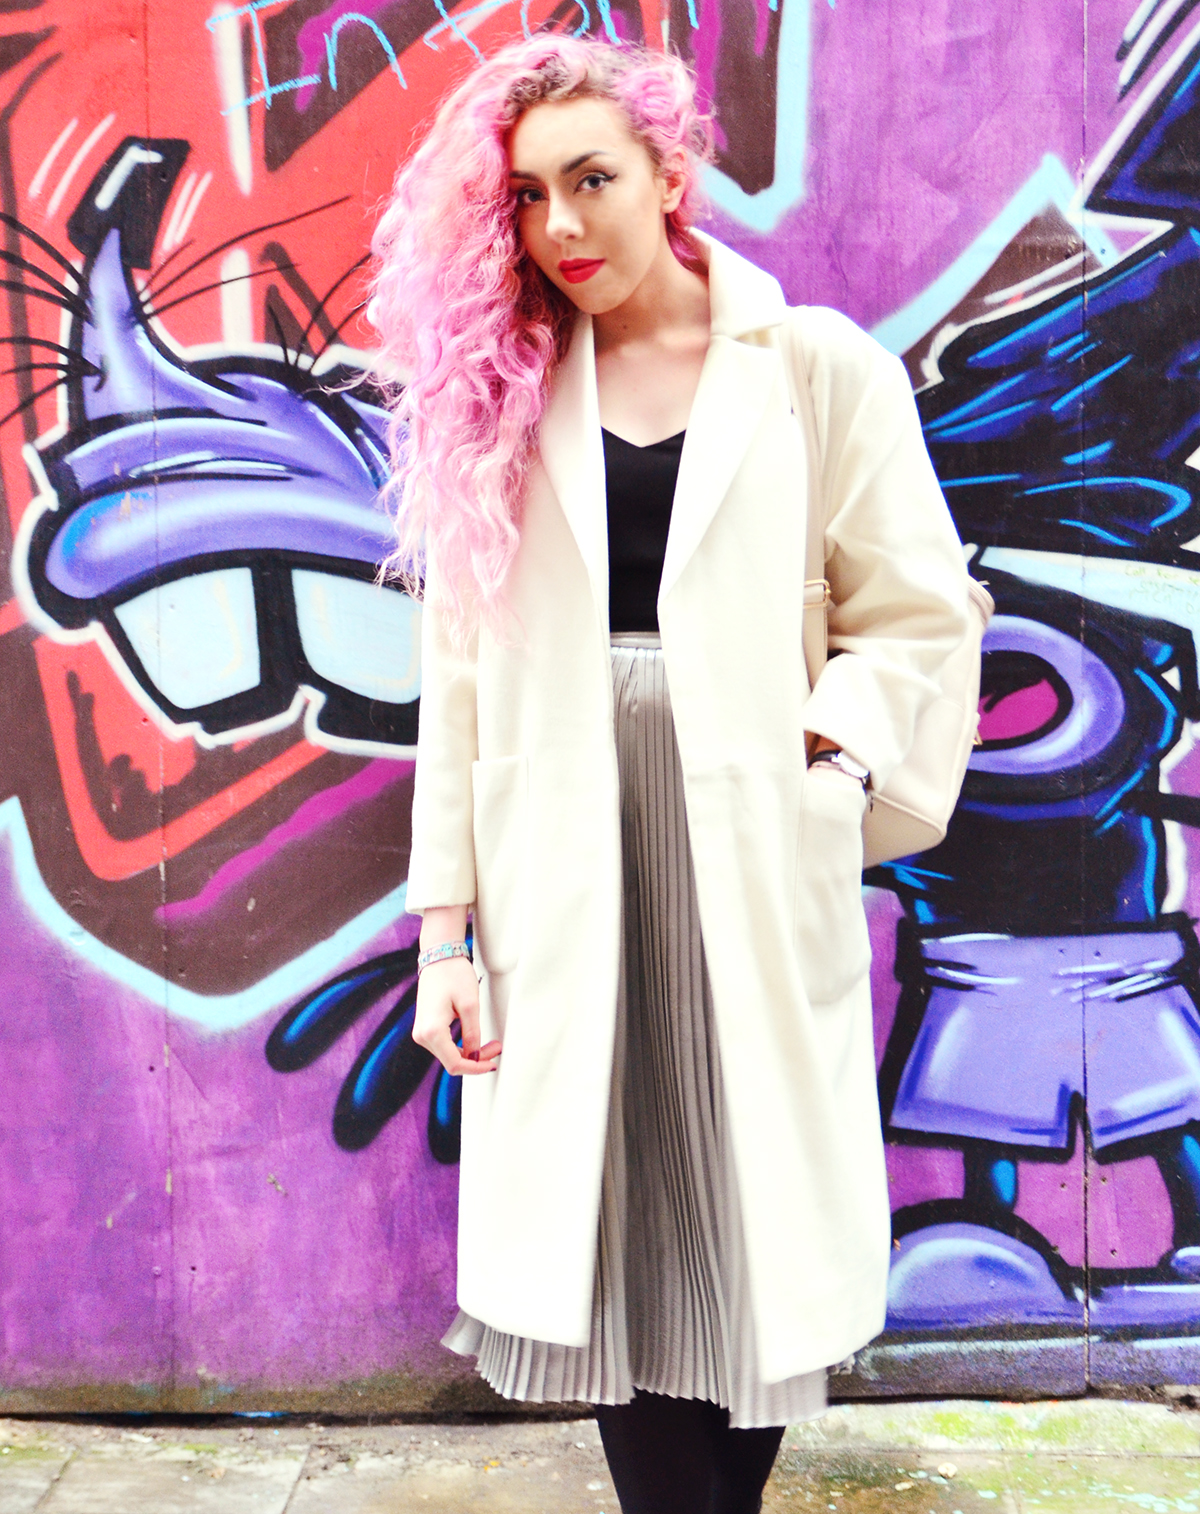 Stephi LaReine Lifestyle Blogger with pink hair